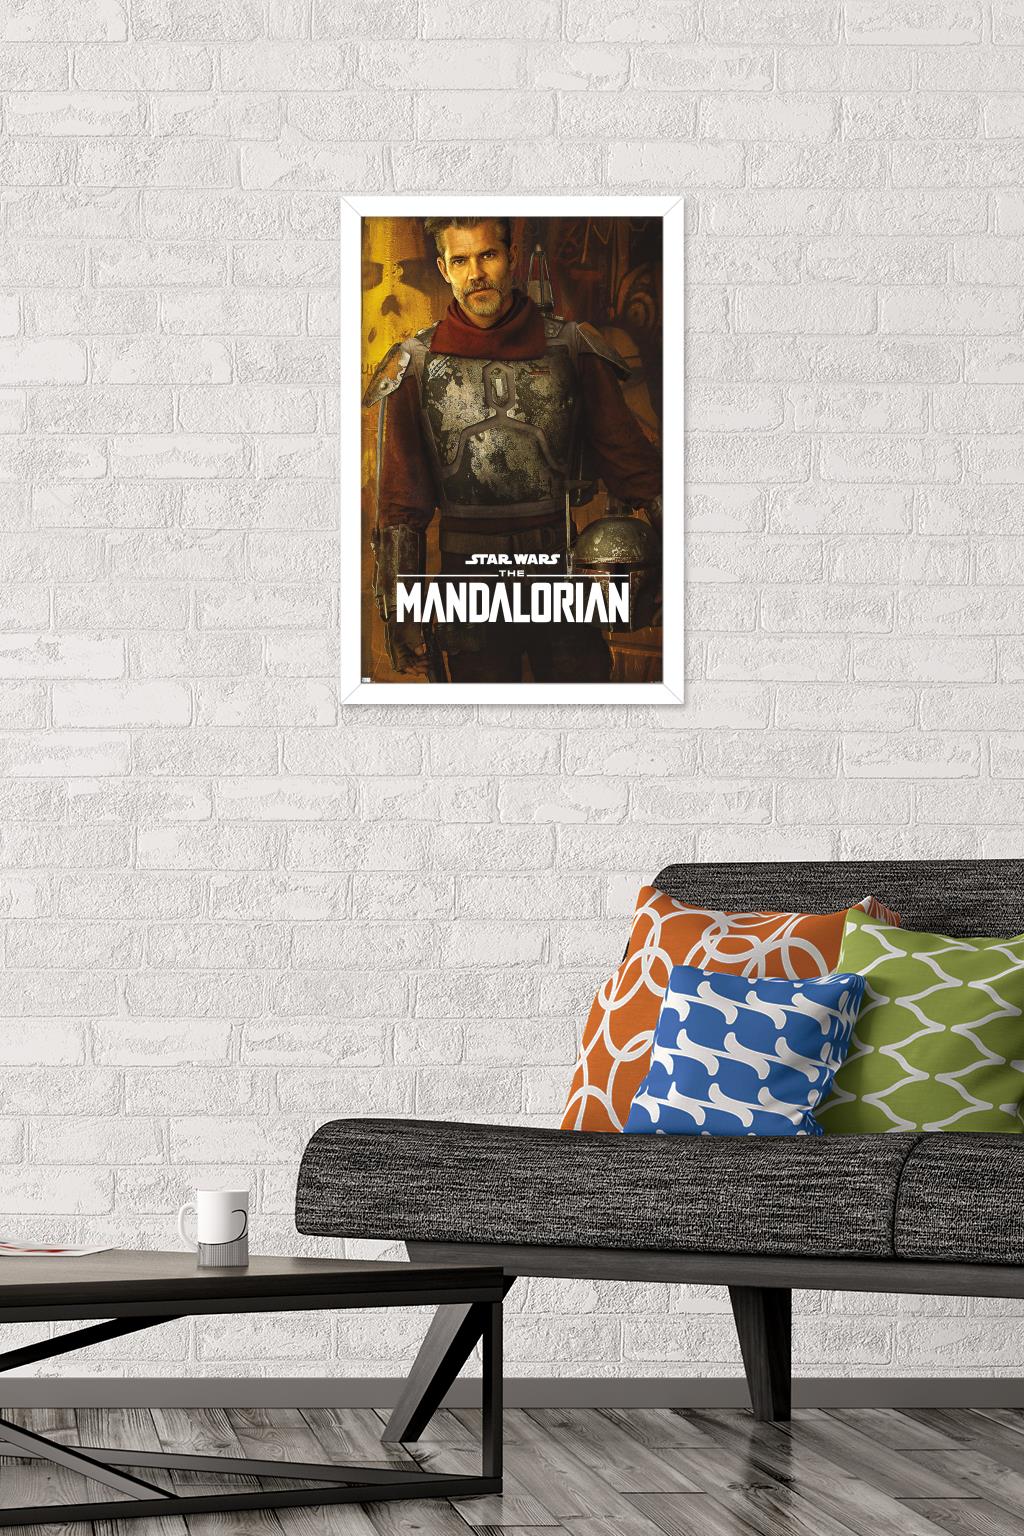 Star Wars: The Mandalorian Season 2 - Cobb Vanth Wall Poster, 14.725" x 22.375", Framed - image 2 of 5